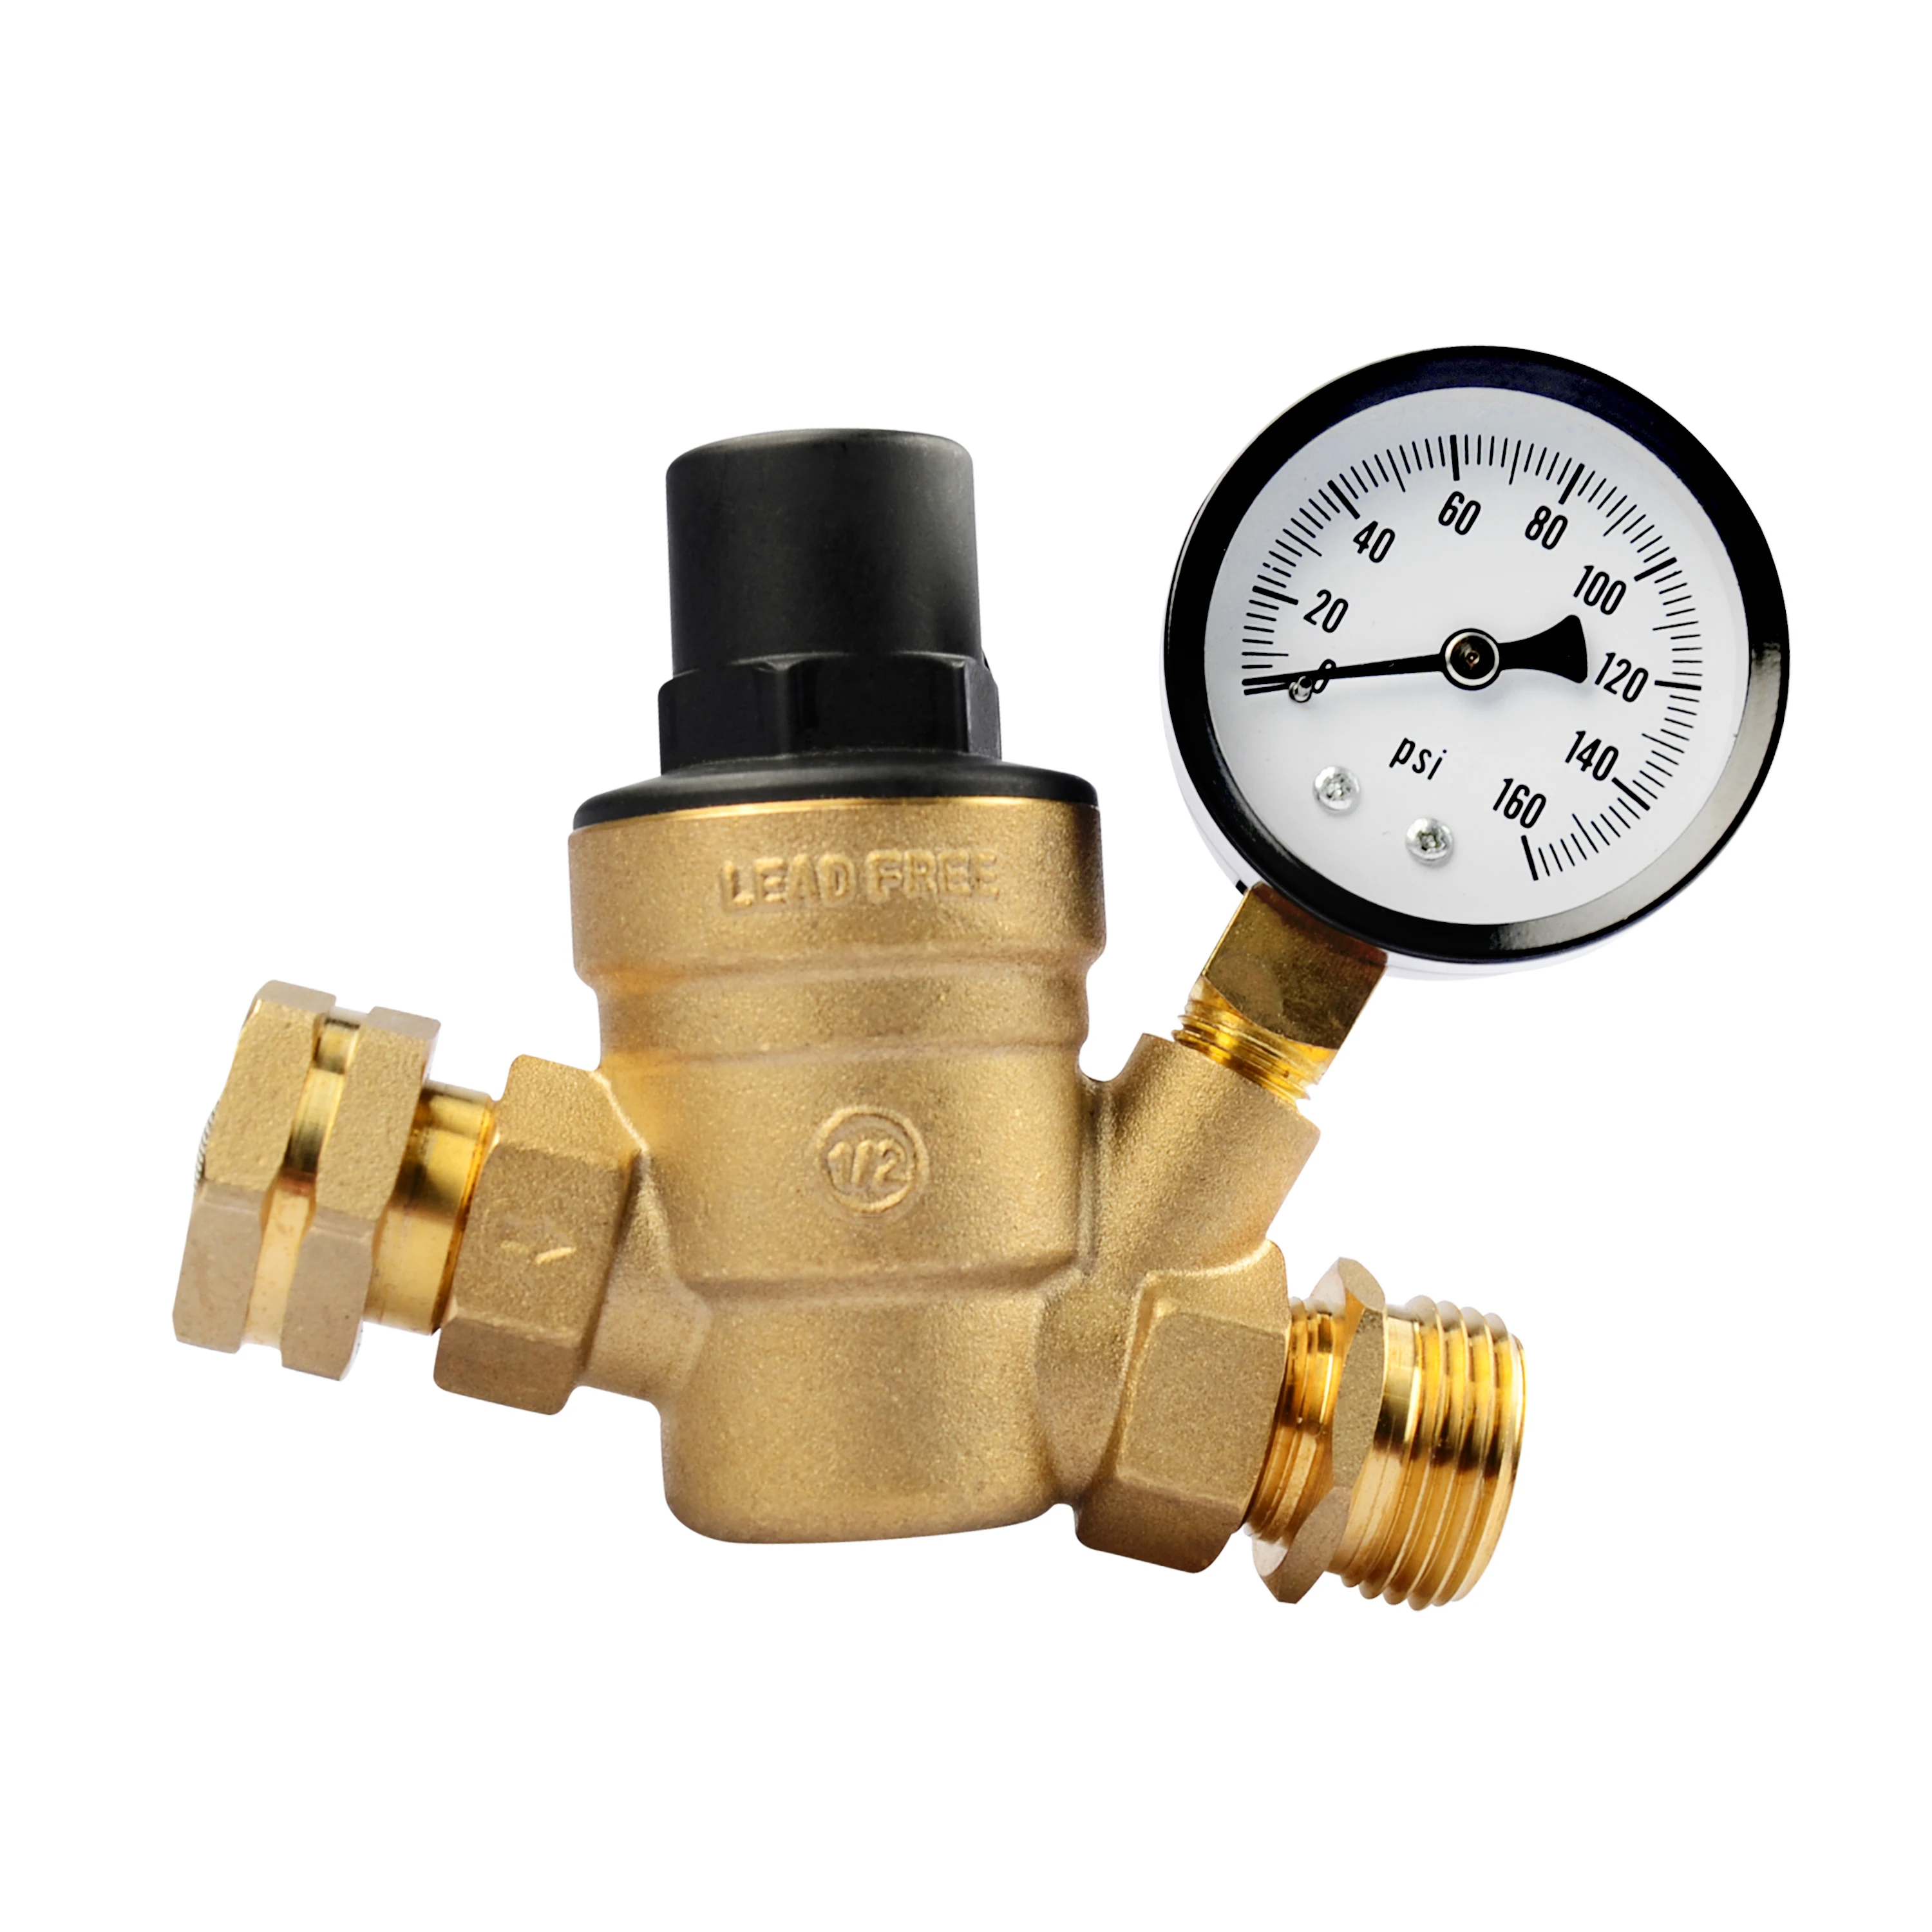 Brass Lead-free Adjustable Water Pressure Reducer with Gauge Water Pressure Regulator Valve for RV Water Pressure Regulator Valve RV Adjustable Water Pressure Regulator RV Pressure Regulator 